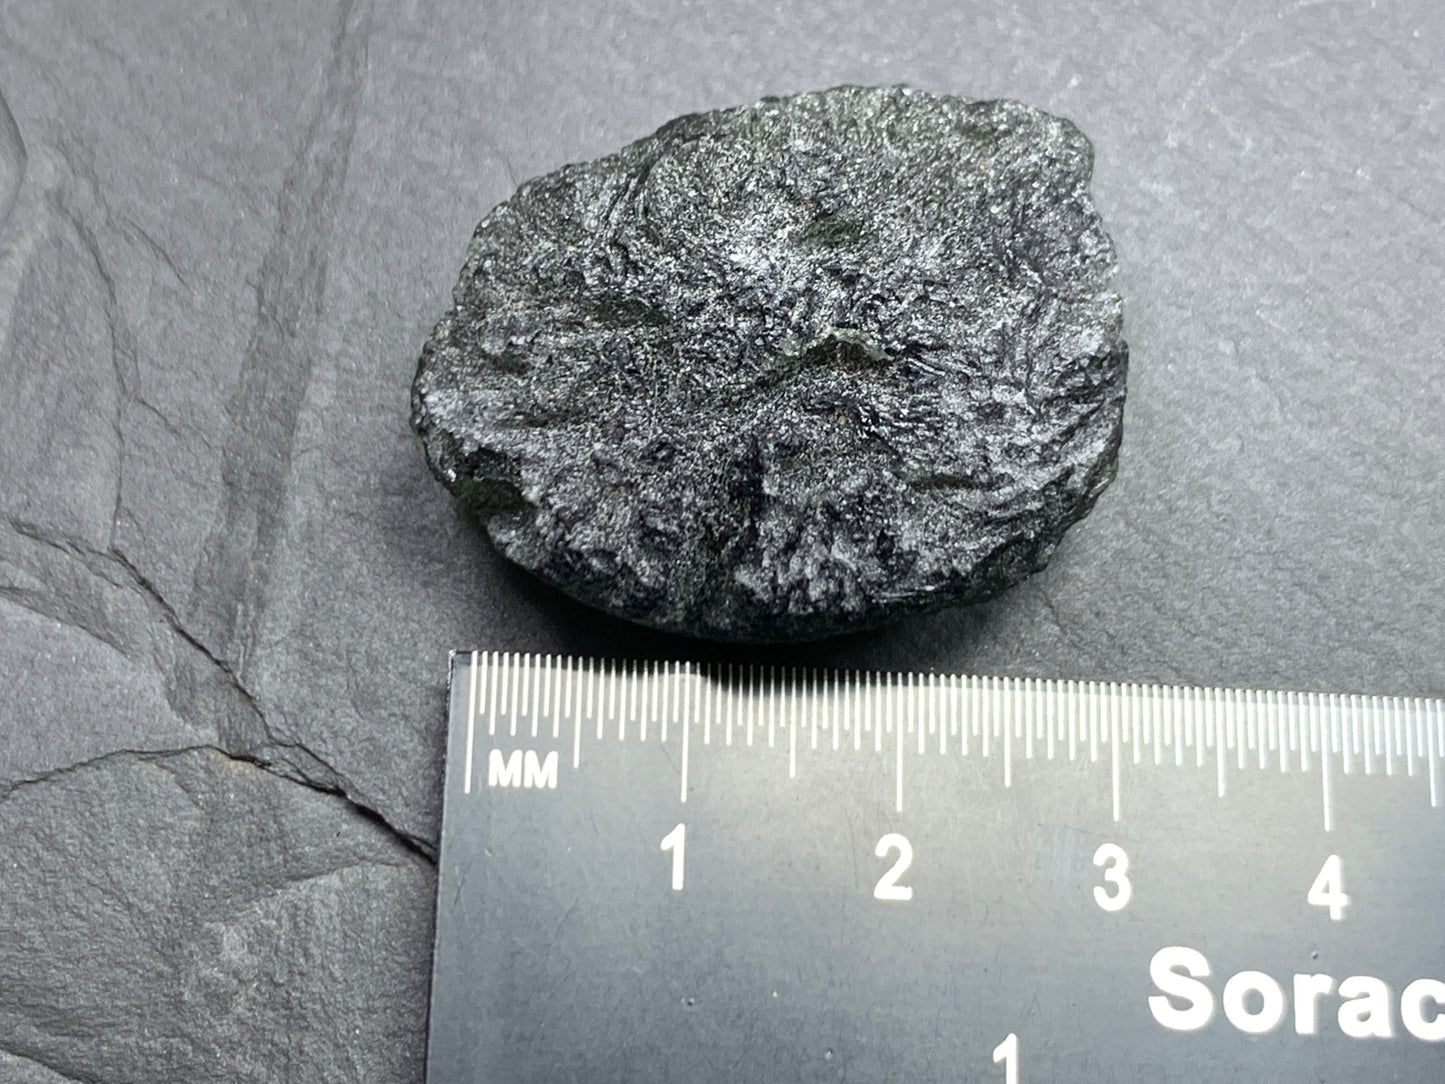 Large Rough Moldavite 16.75g/ rough Moldavite crystal